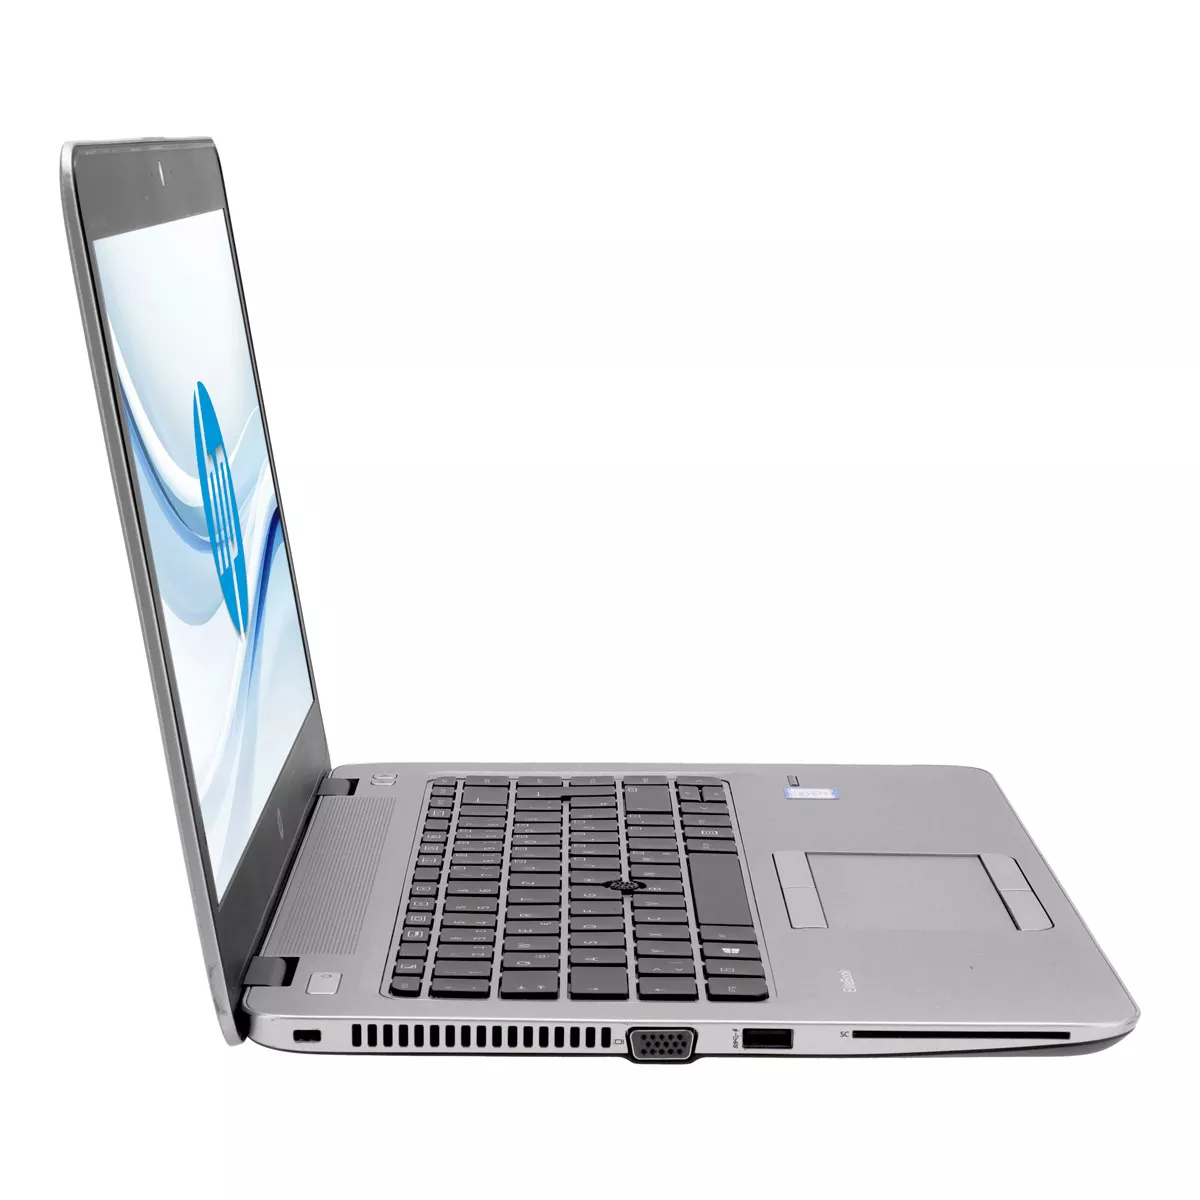 HP EliteBook 840 G4 Core i5 7300U Full-HD 240 GB M.2 SSD Webcam B